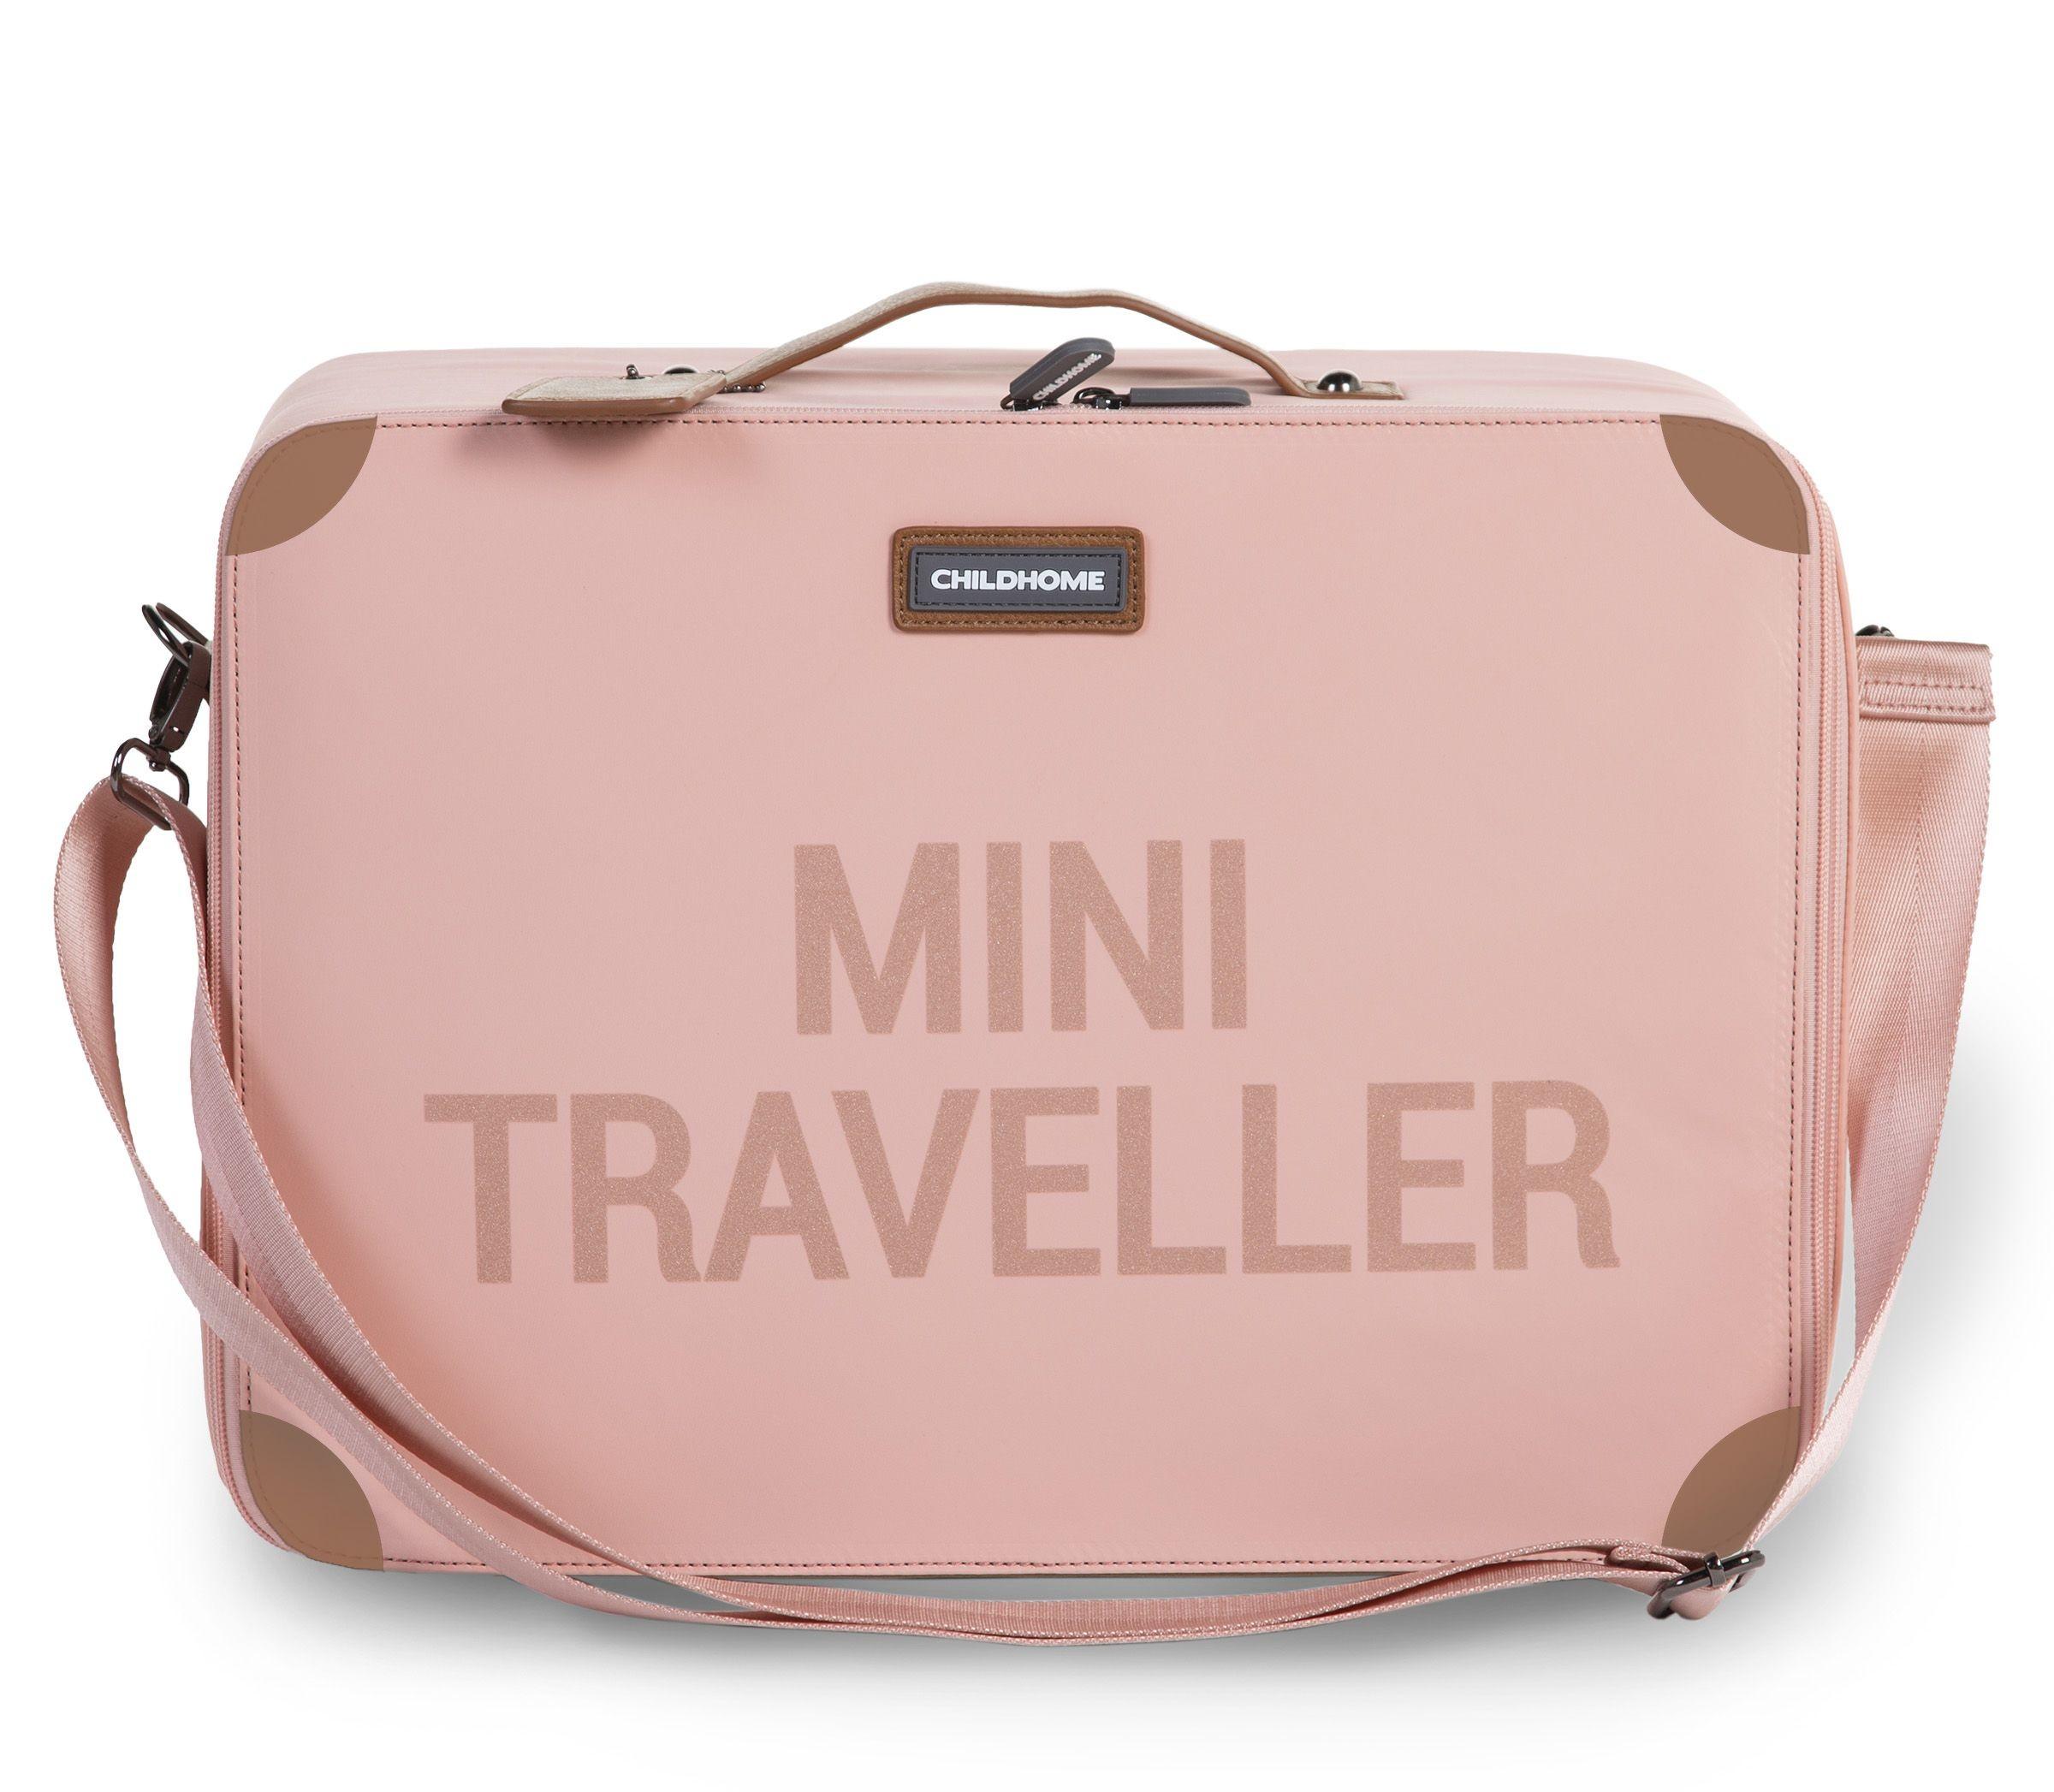 Childhome - Mini traveller valiesje roze/koper